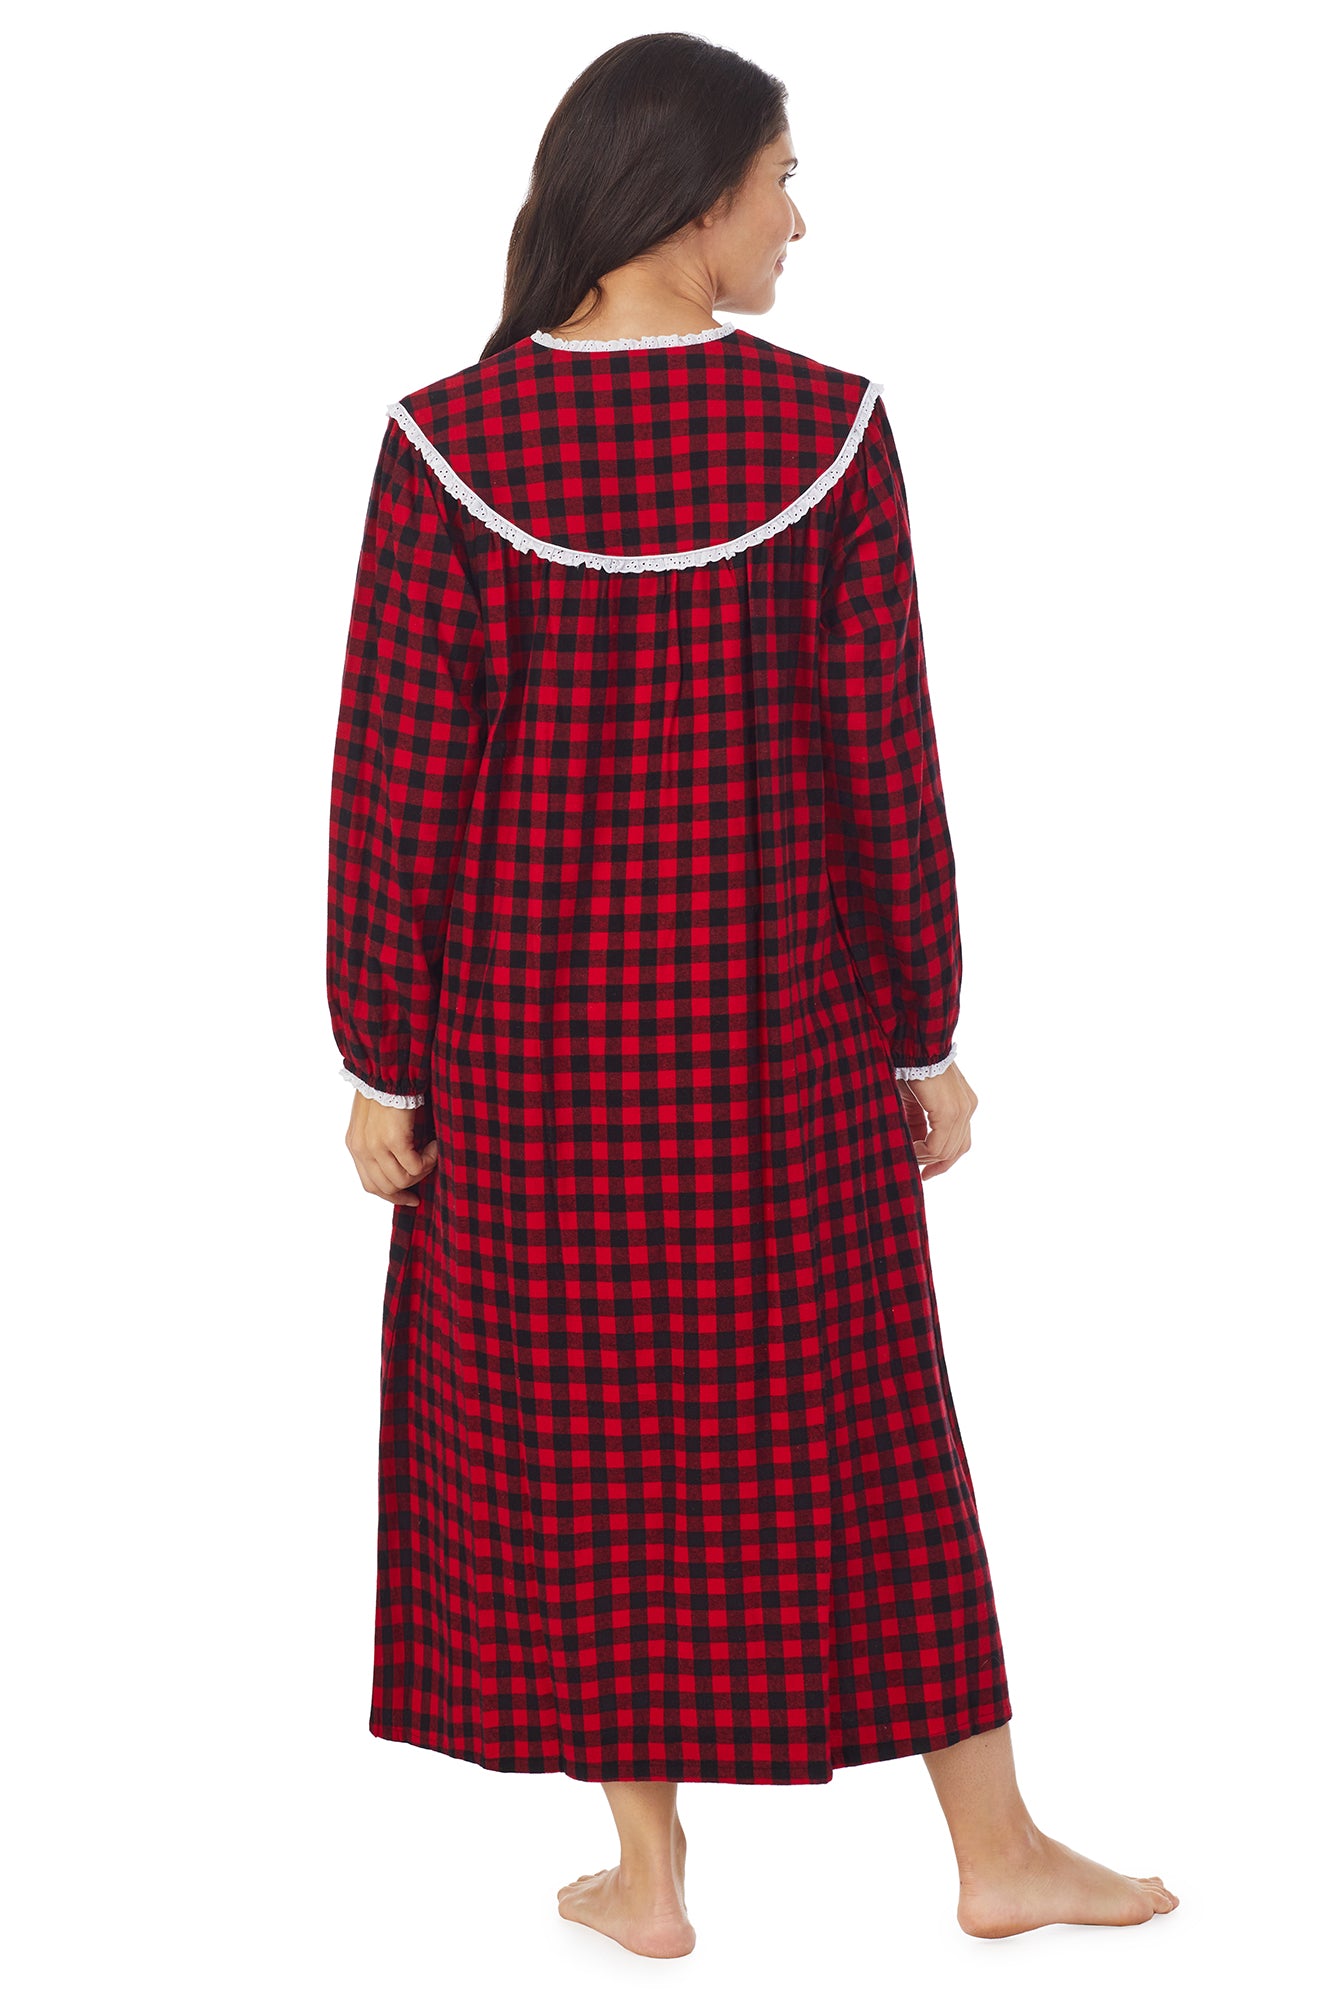 Buy Checkered Dress & Plus Size Dresses For Women - Apella